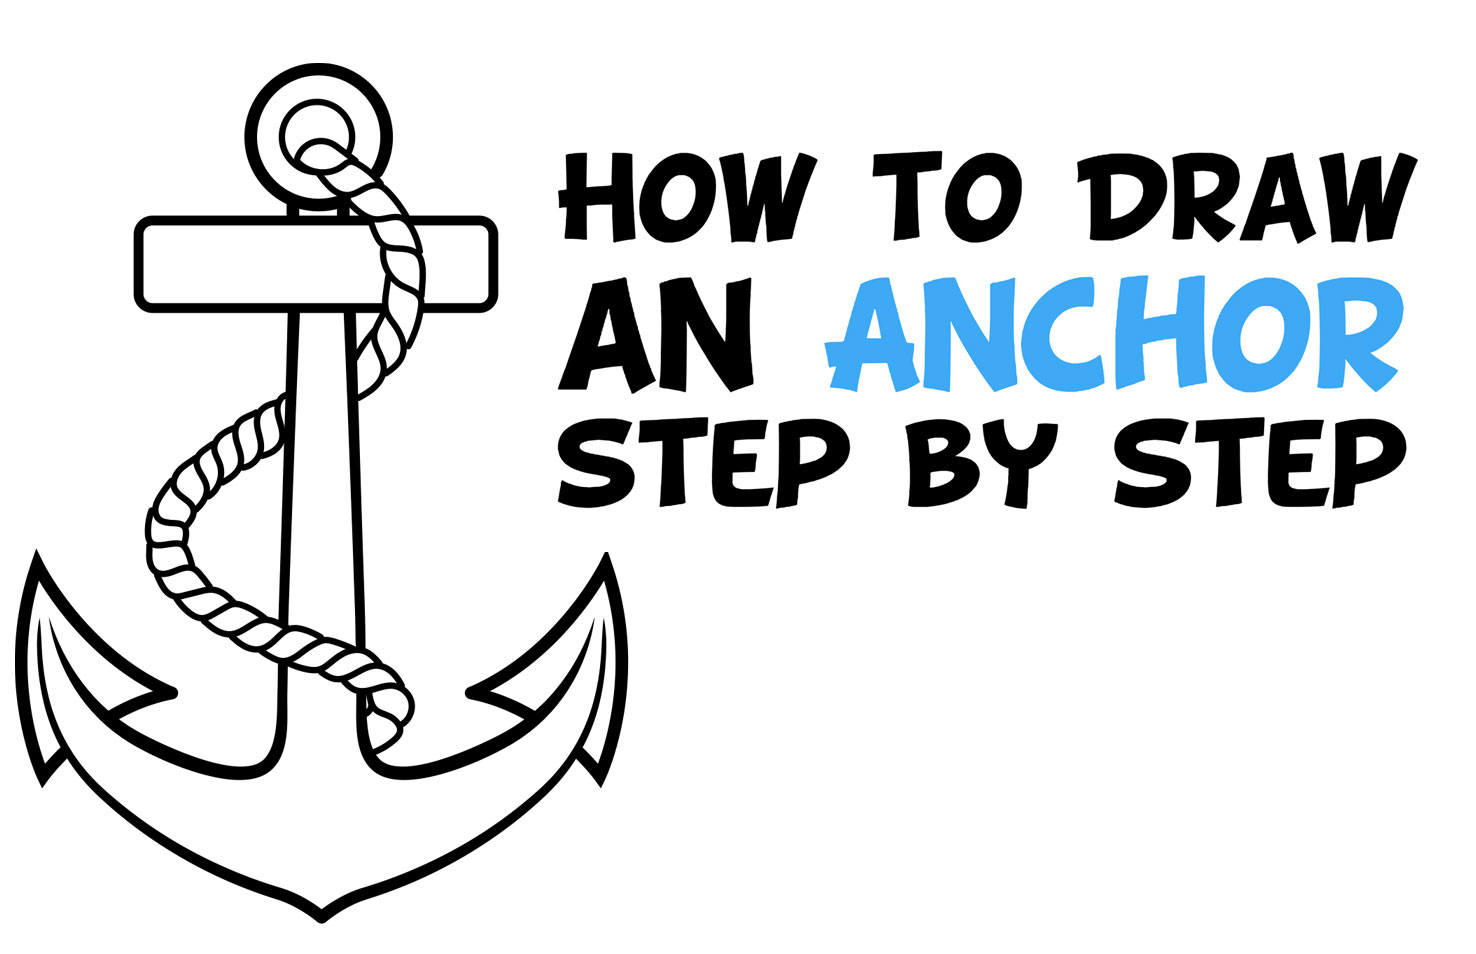 Anchor drawing inspiration